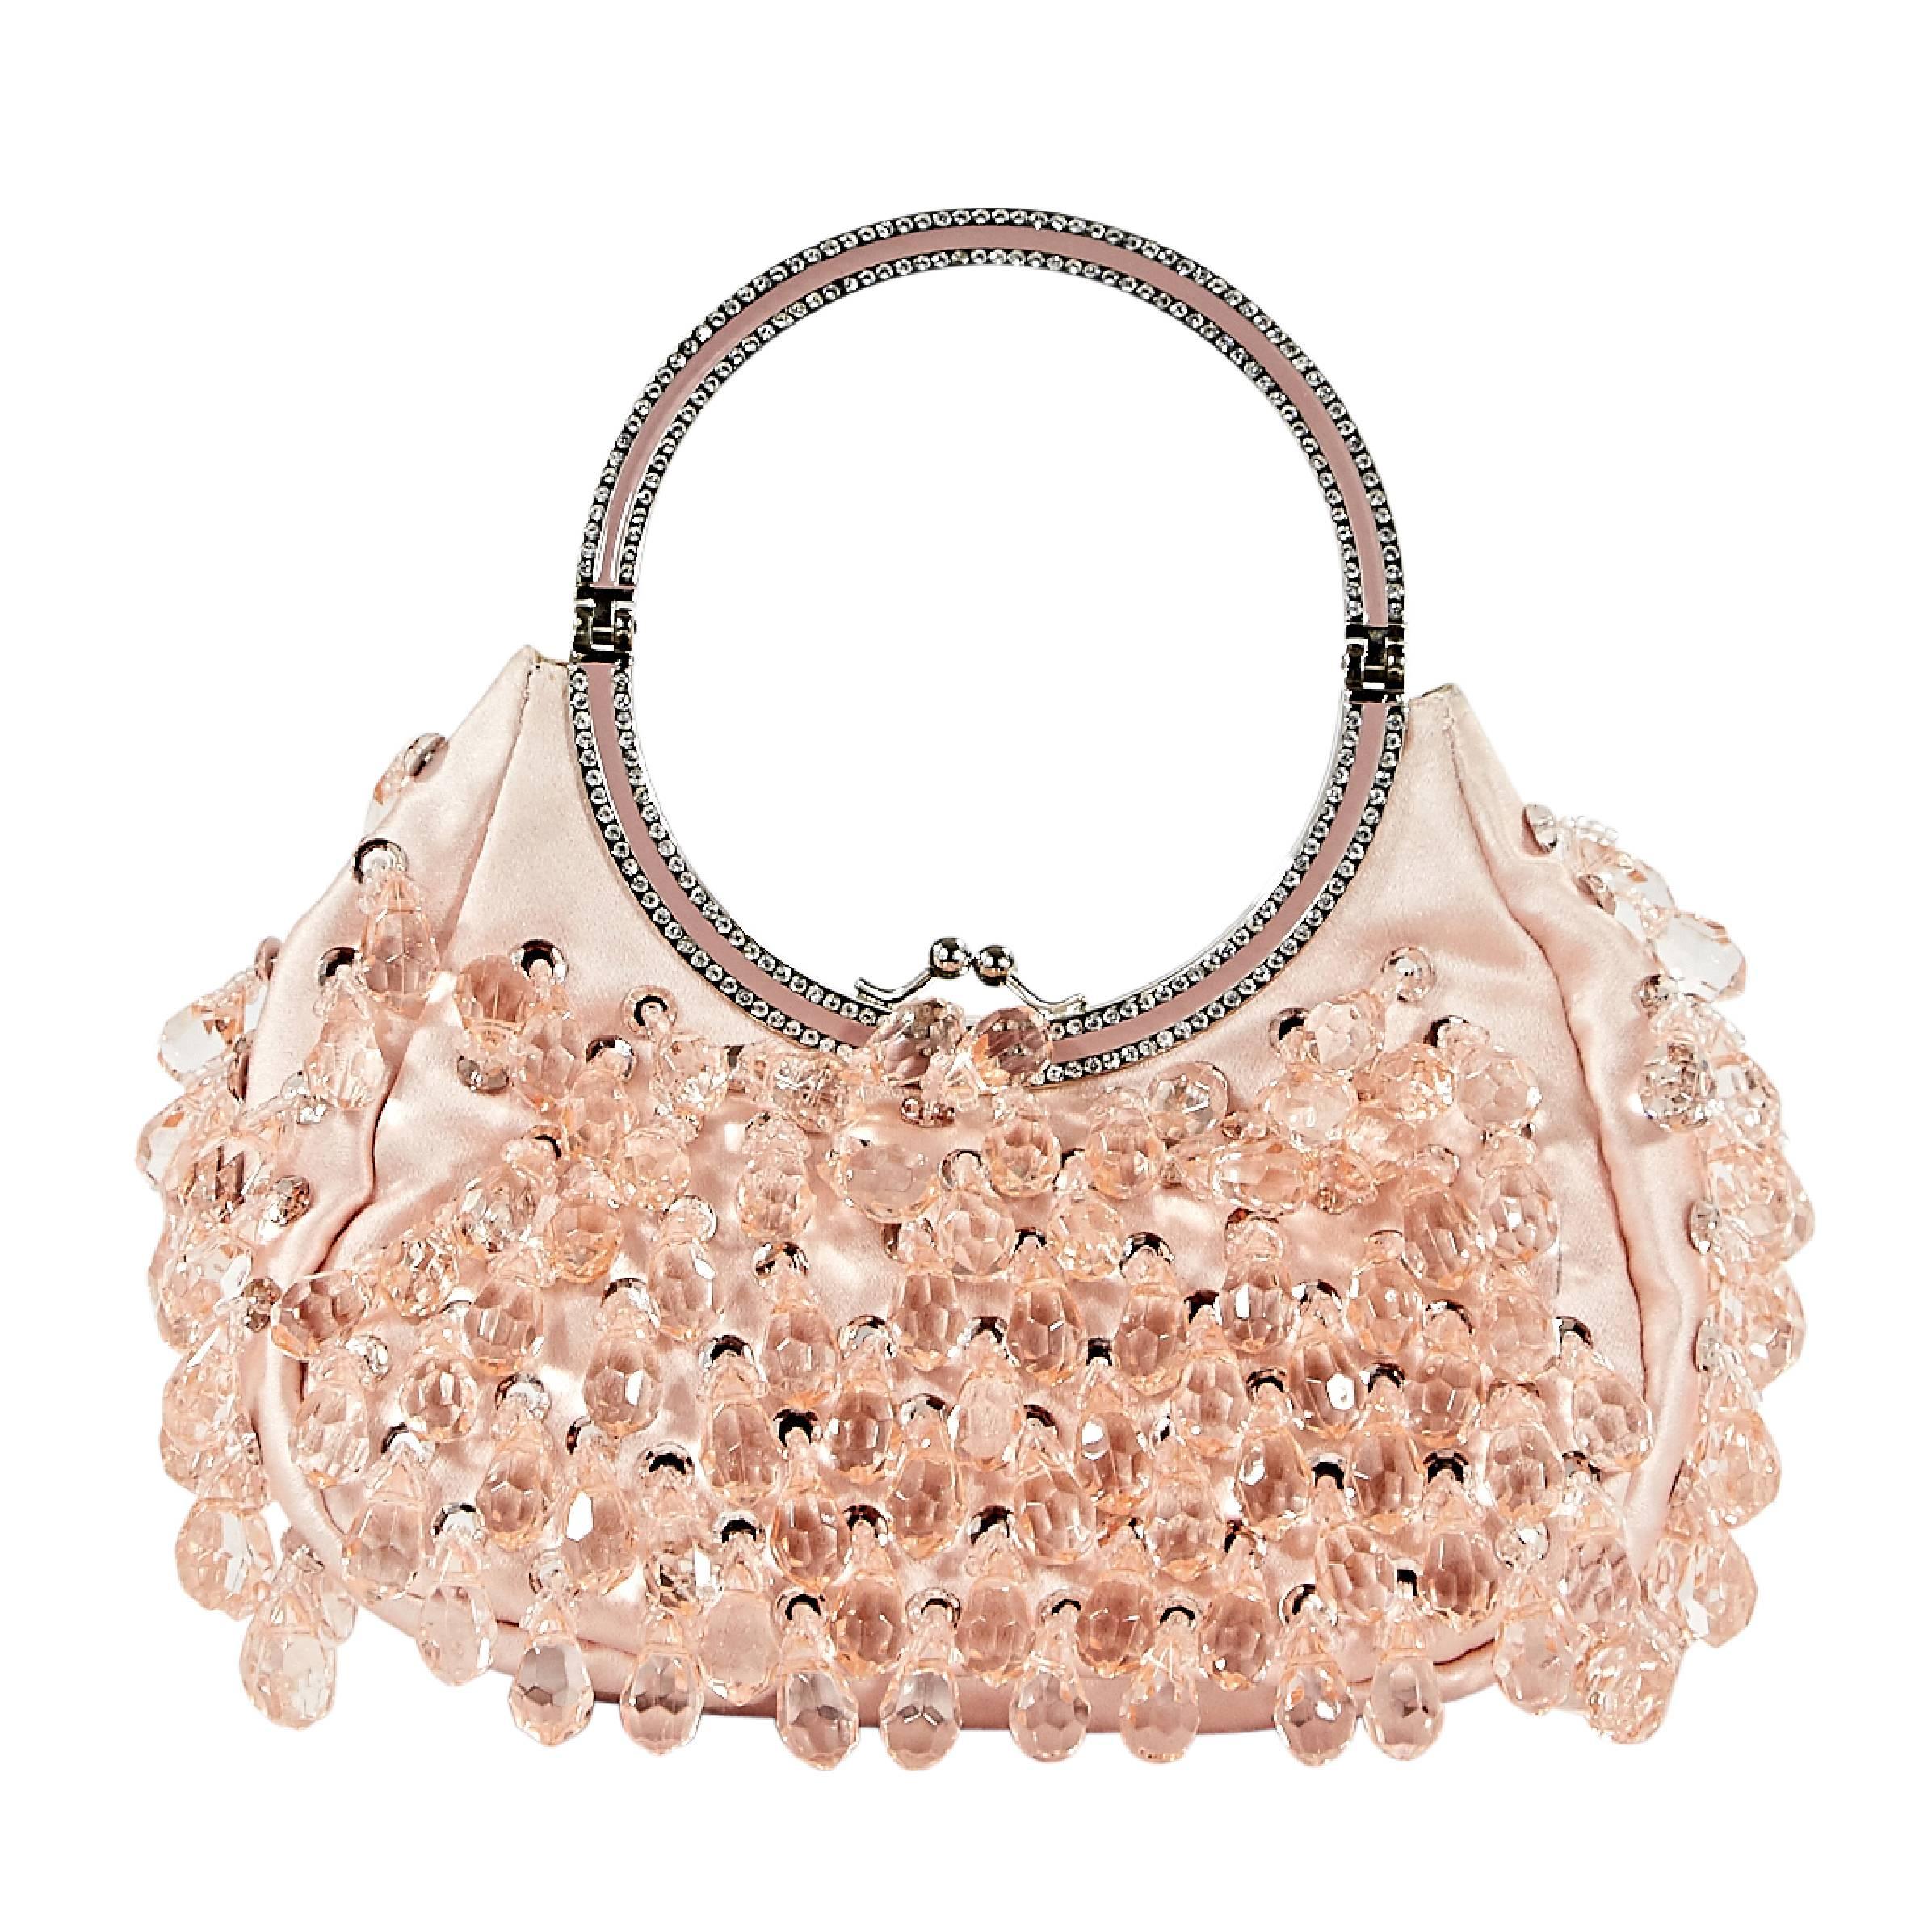 Peach Valentino Embellished Satin Handbag